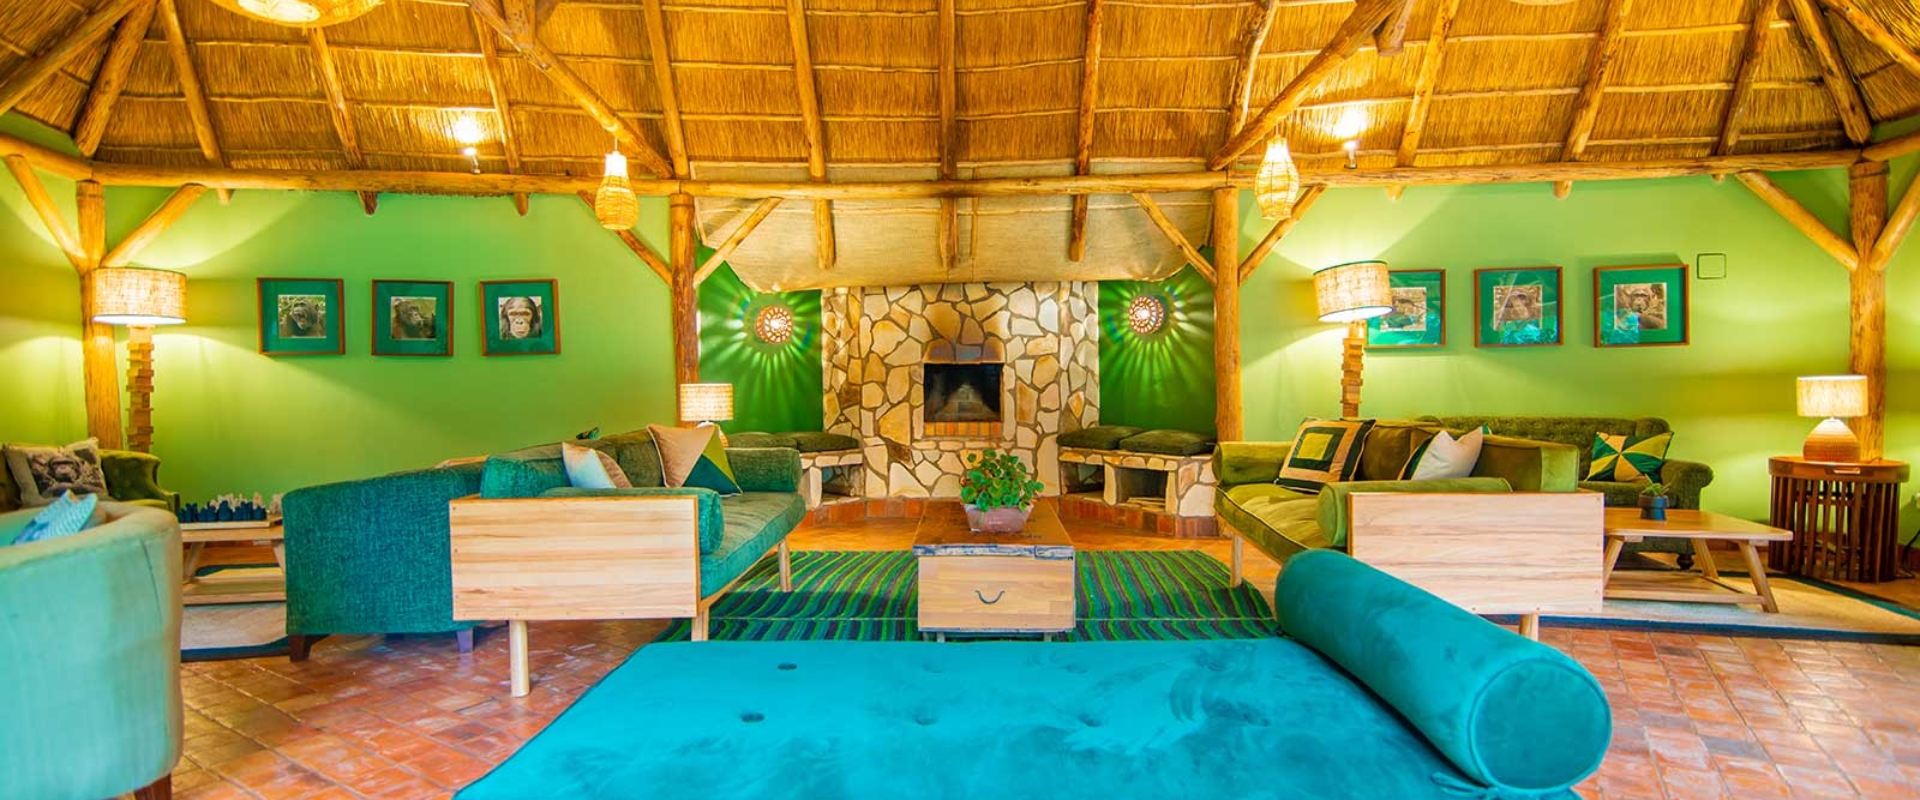 Primate Lodge Kibale - Lounge Area with Fire Place